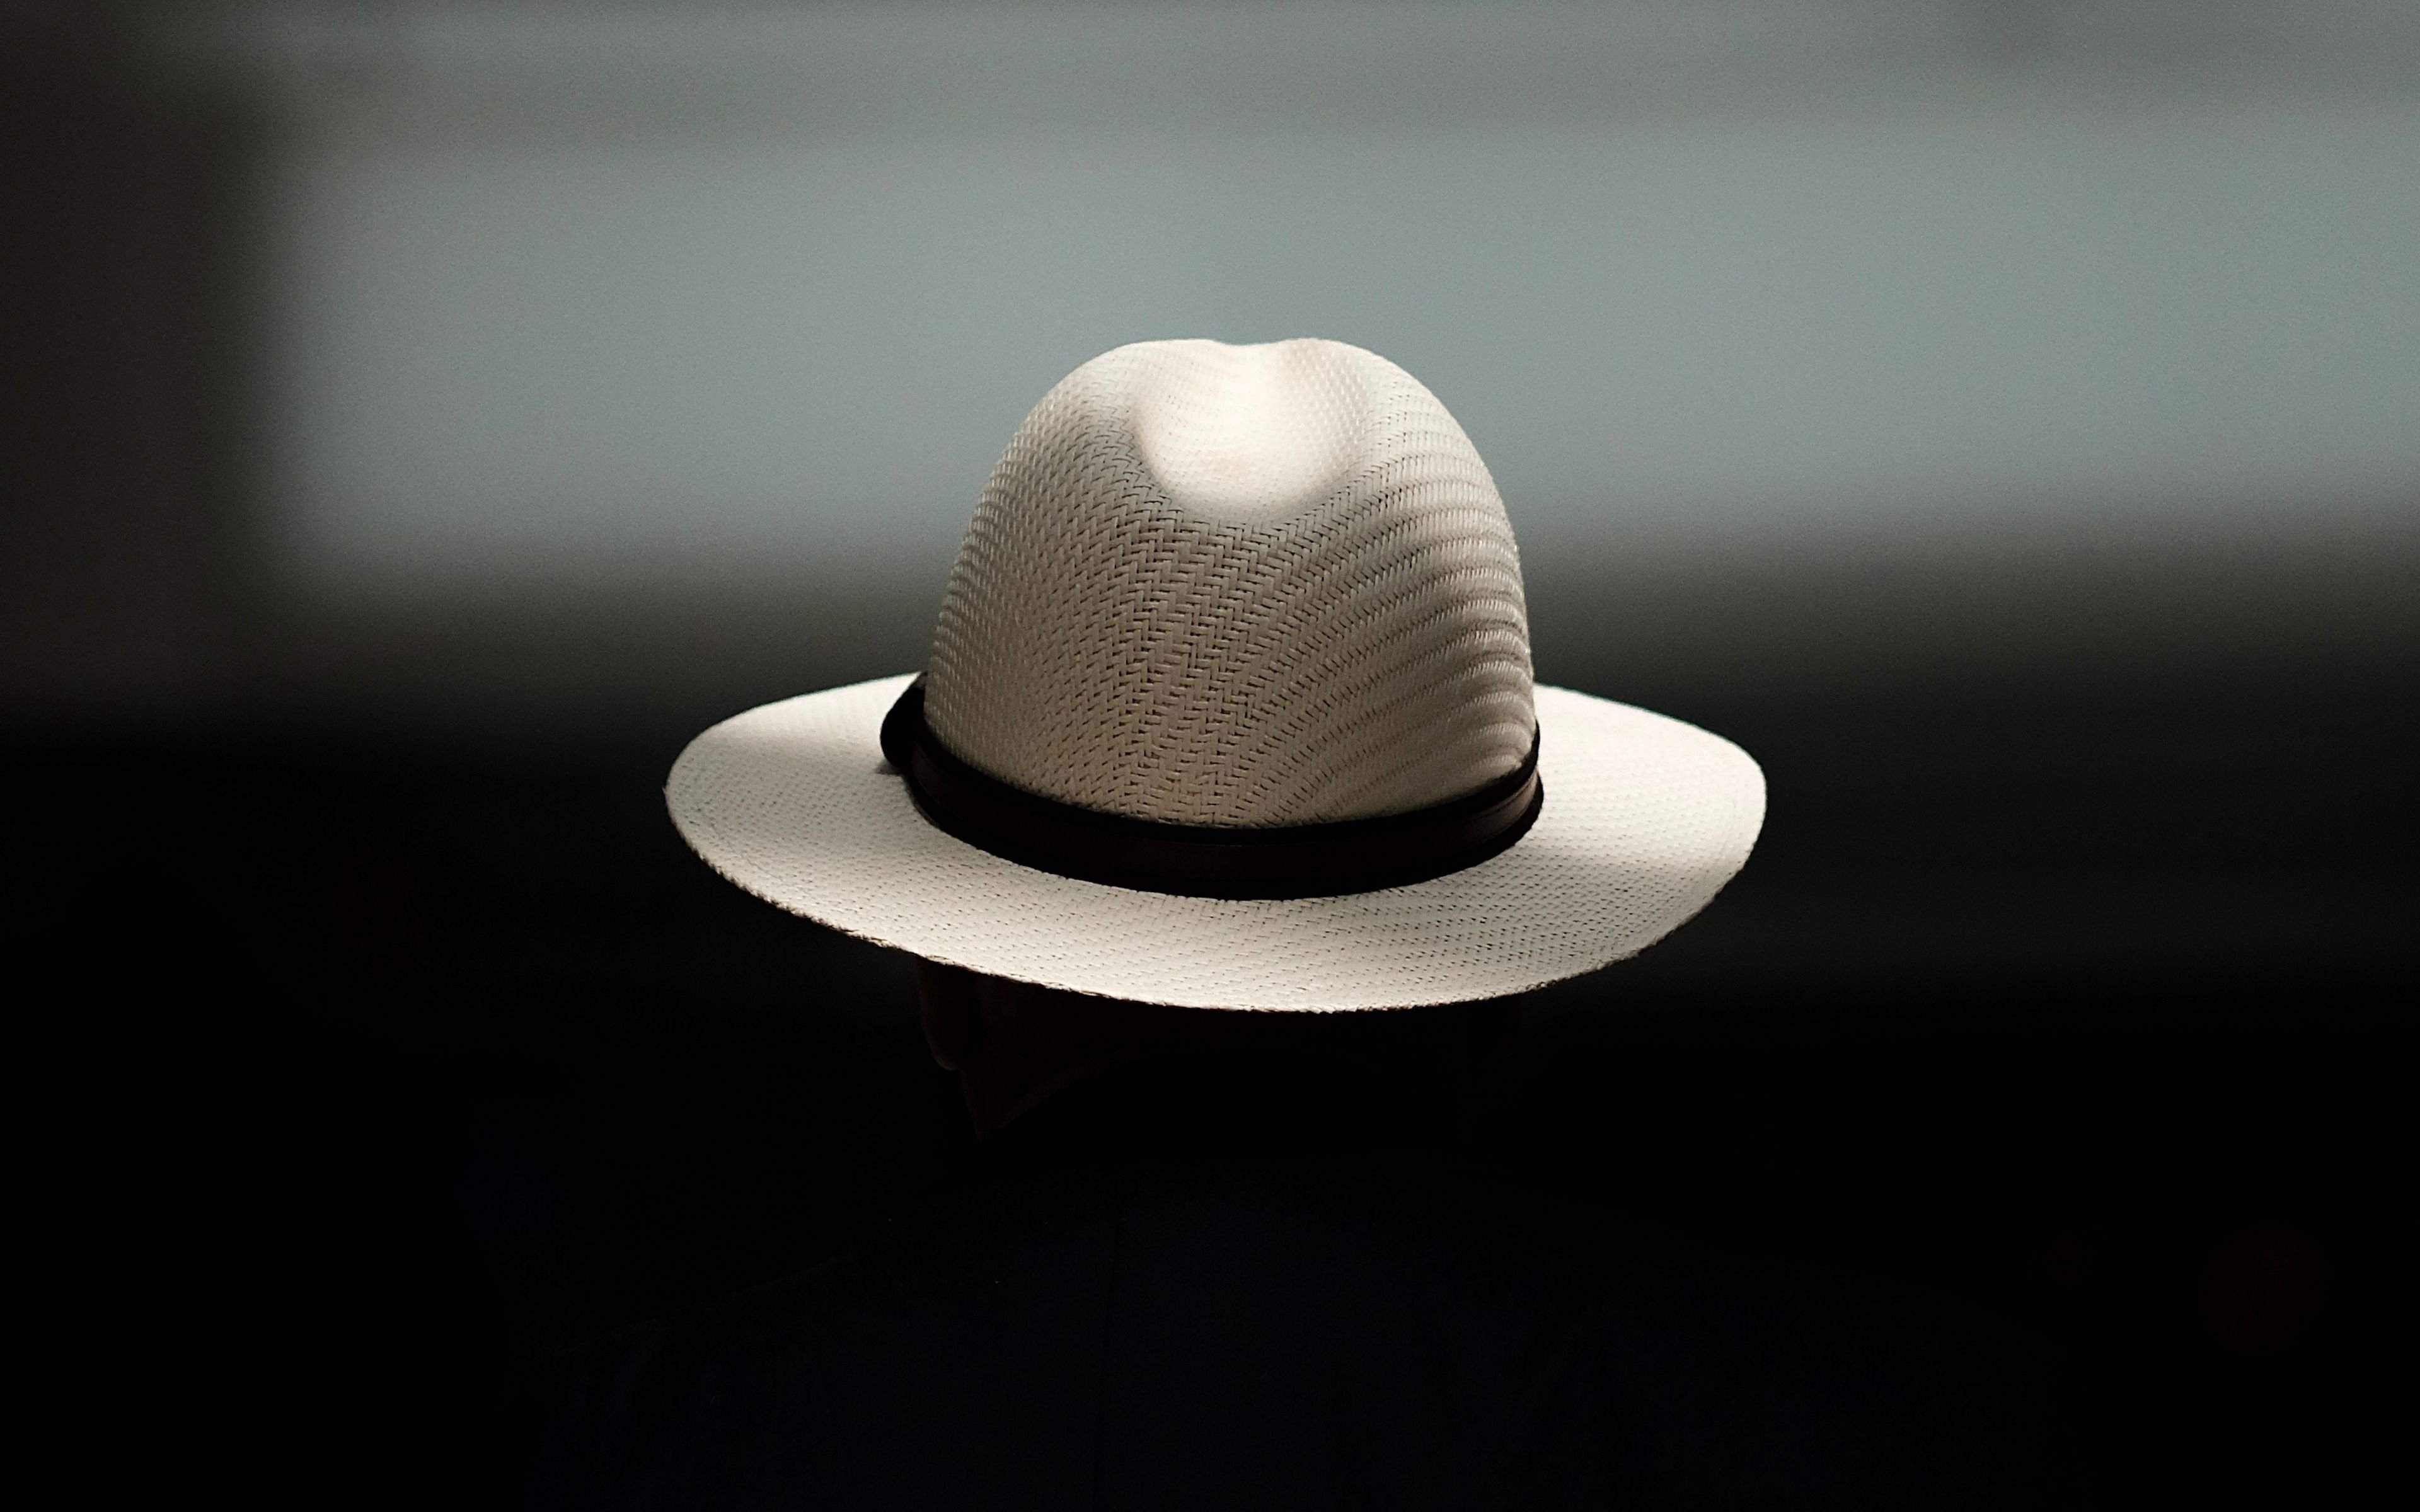 Обои шляпа. Шляпа на столе. Шляпа черная. Шляпа Минимализм. Обои со шляпой.